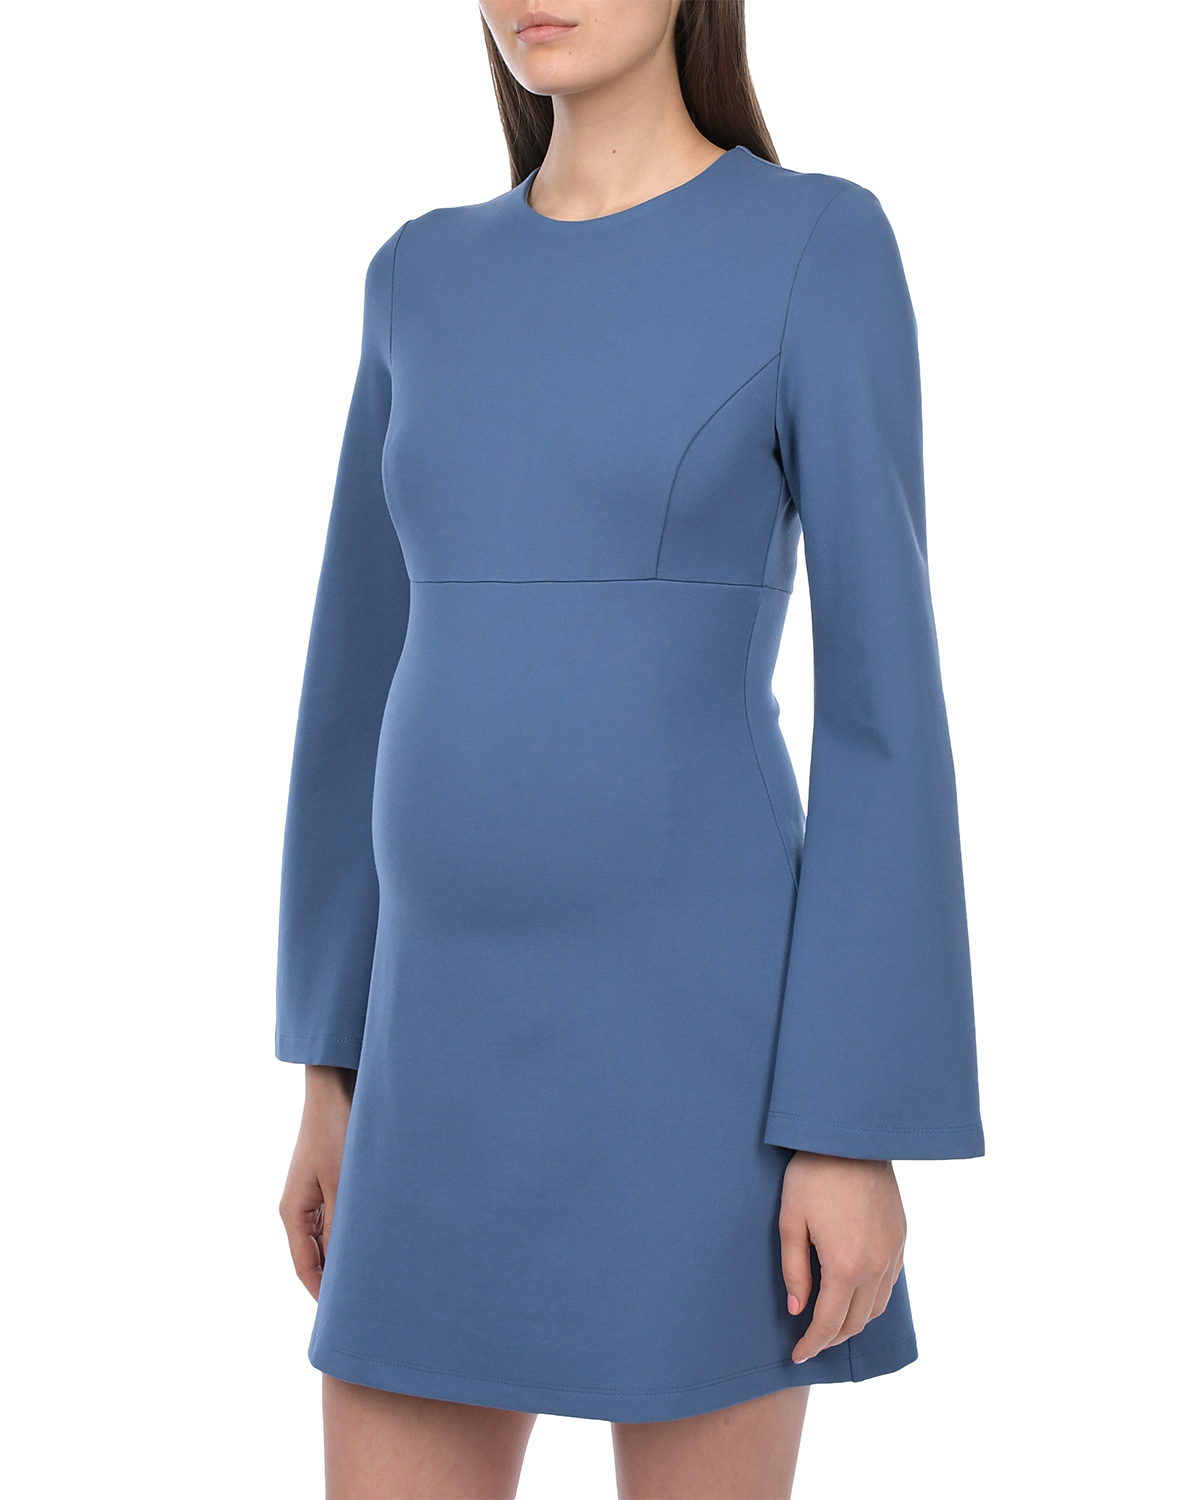 Синее платье с рукавами клеш Dan Maralex, размер 42, цвет синий - фото 6